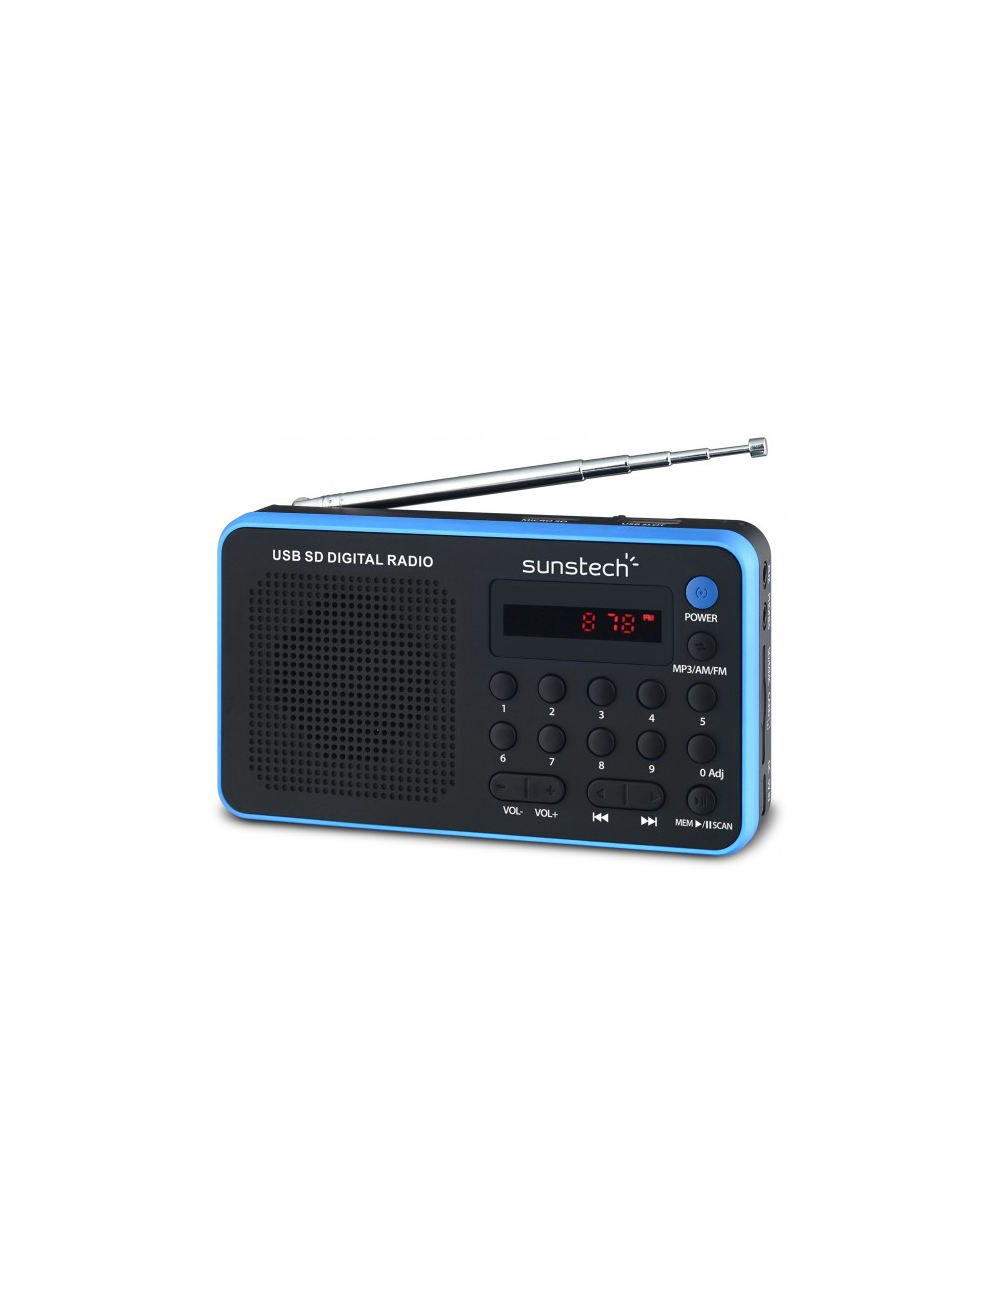 Radio Portatil Digital